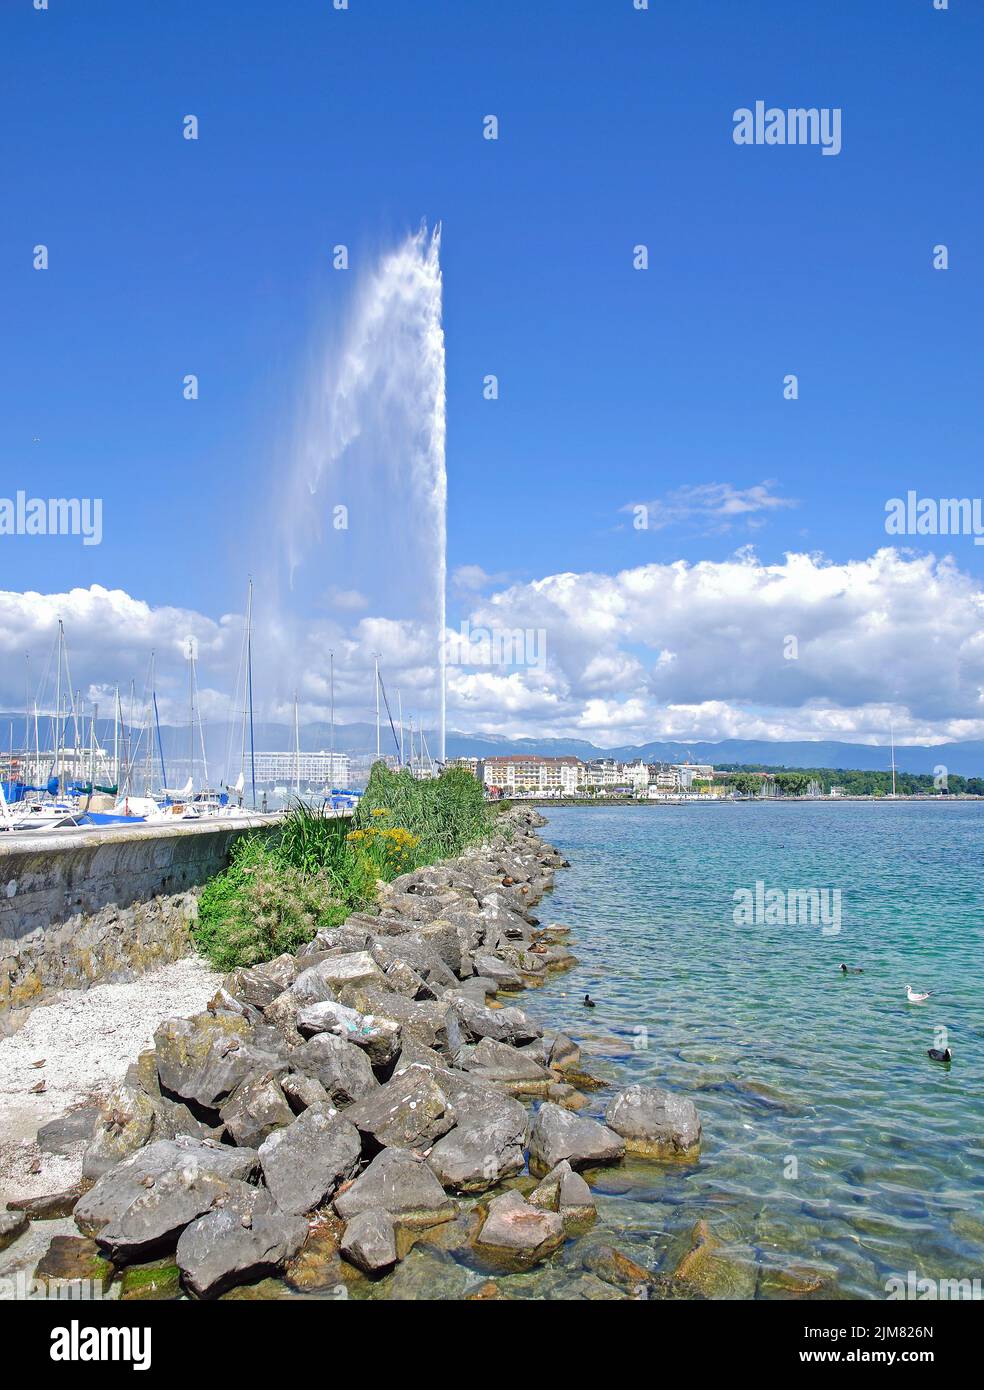 Geneva with the water column Stock Photo